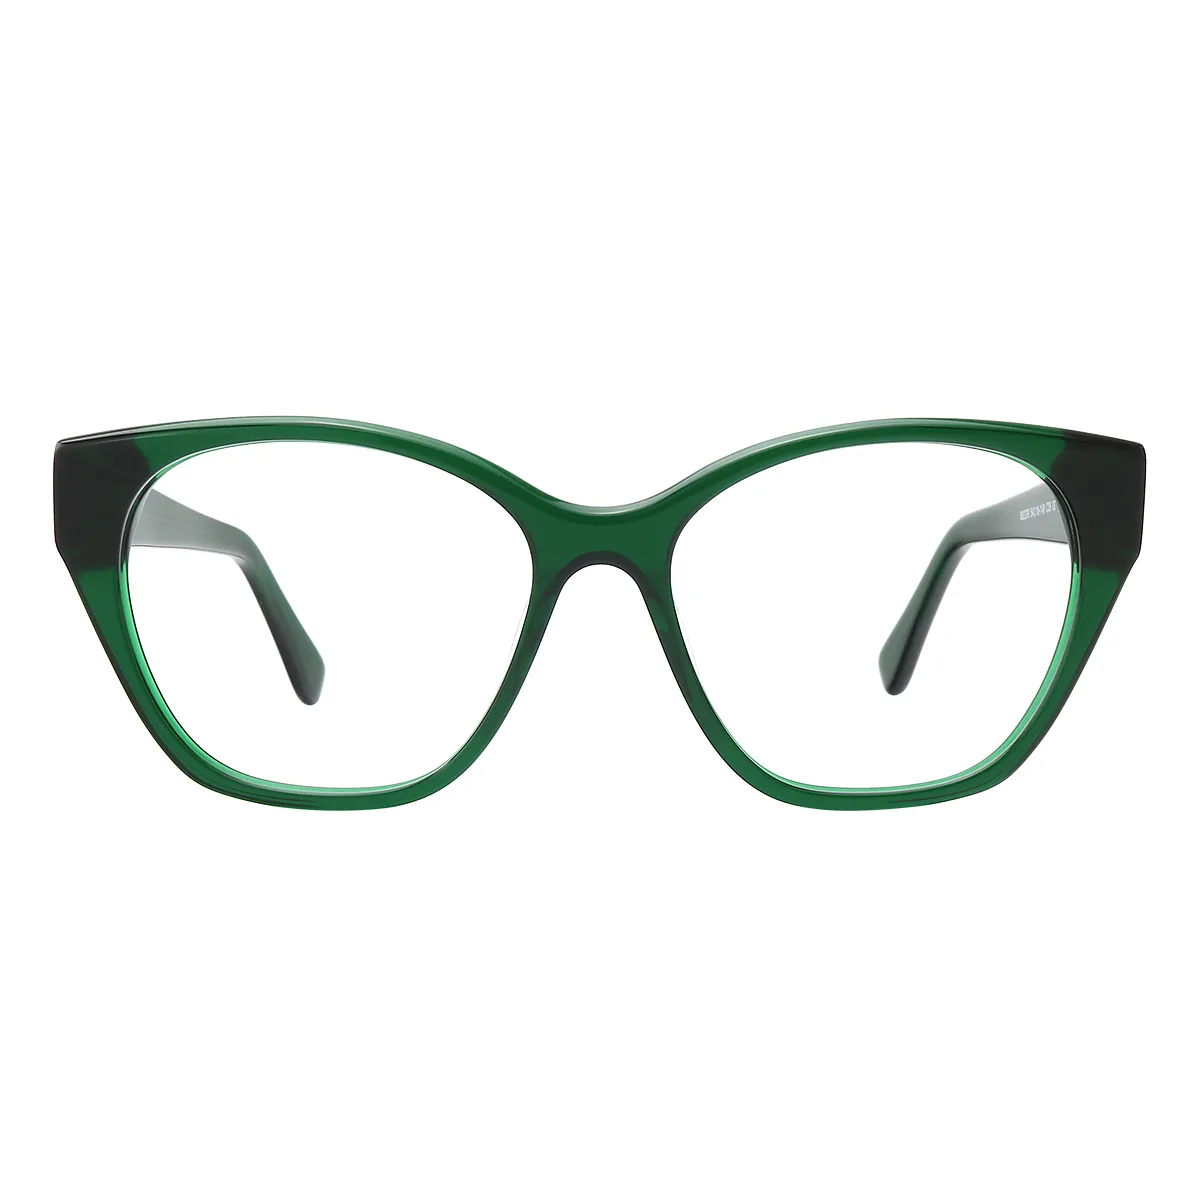 Surrey - Square Transparent-Green Glasses for Women